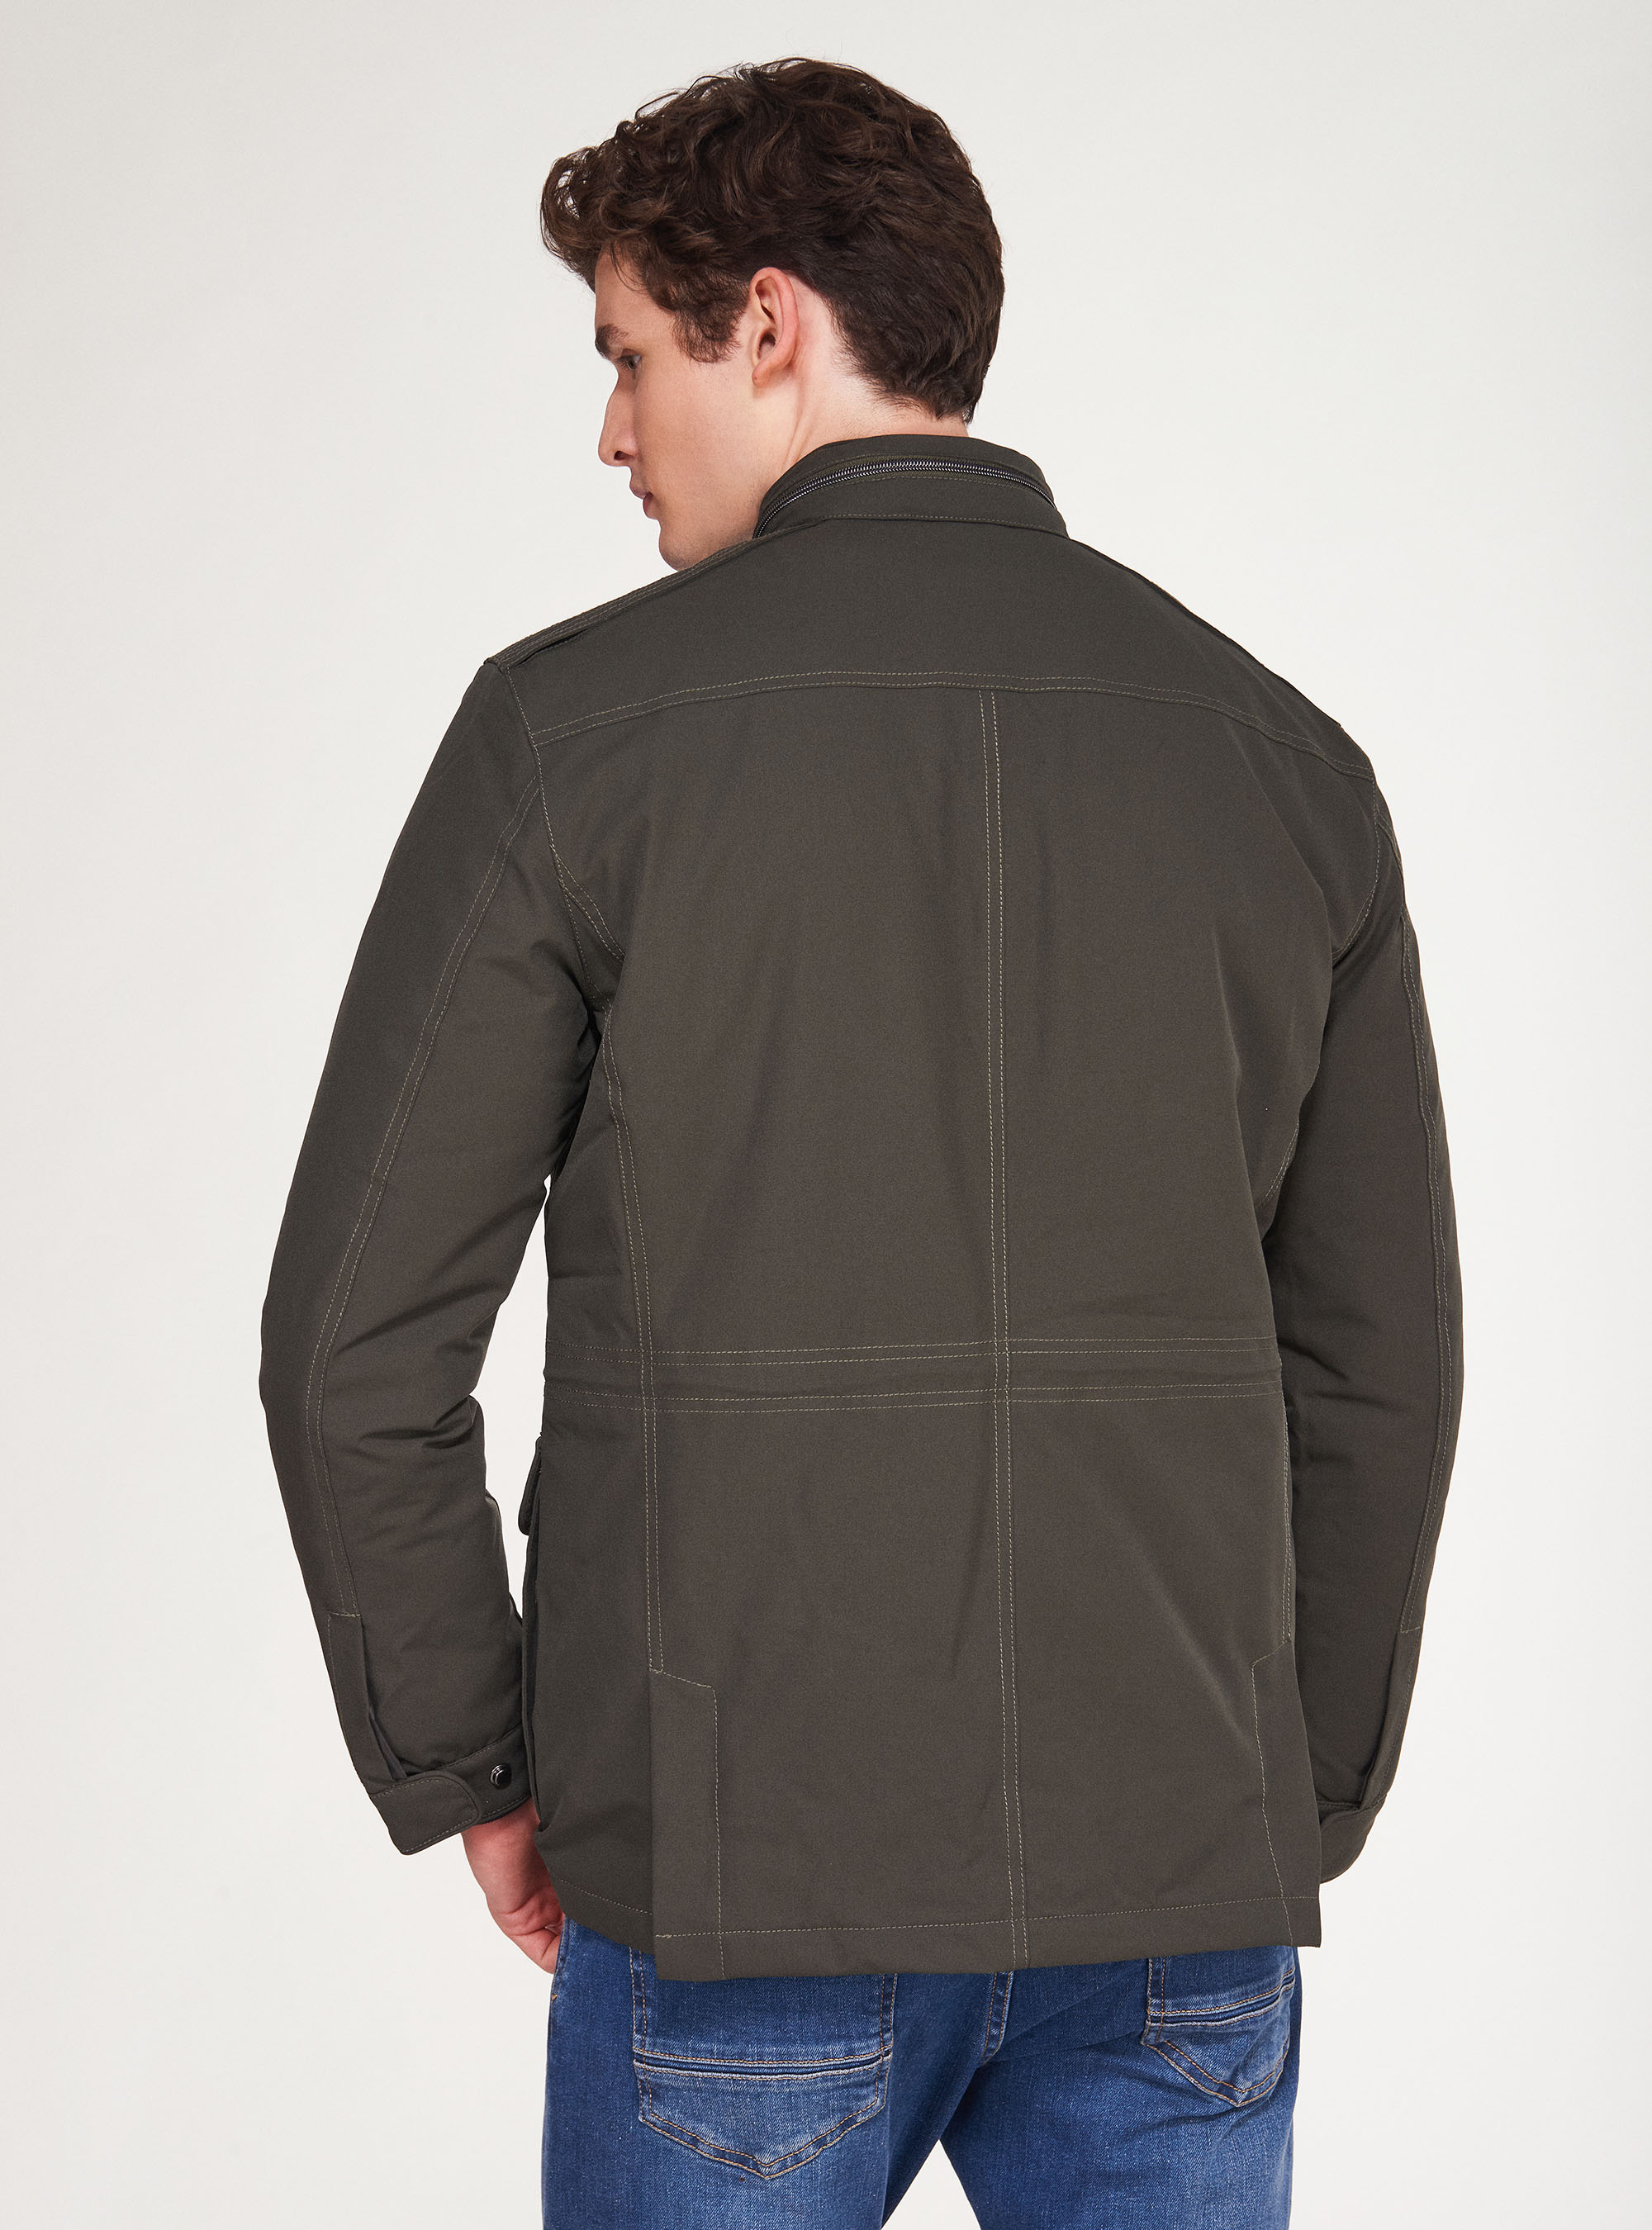 Field jacket in technical fabric